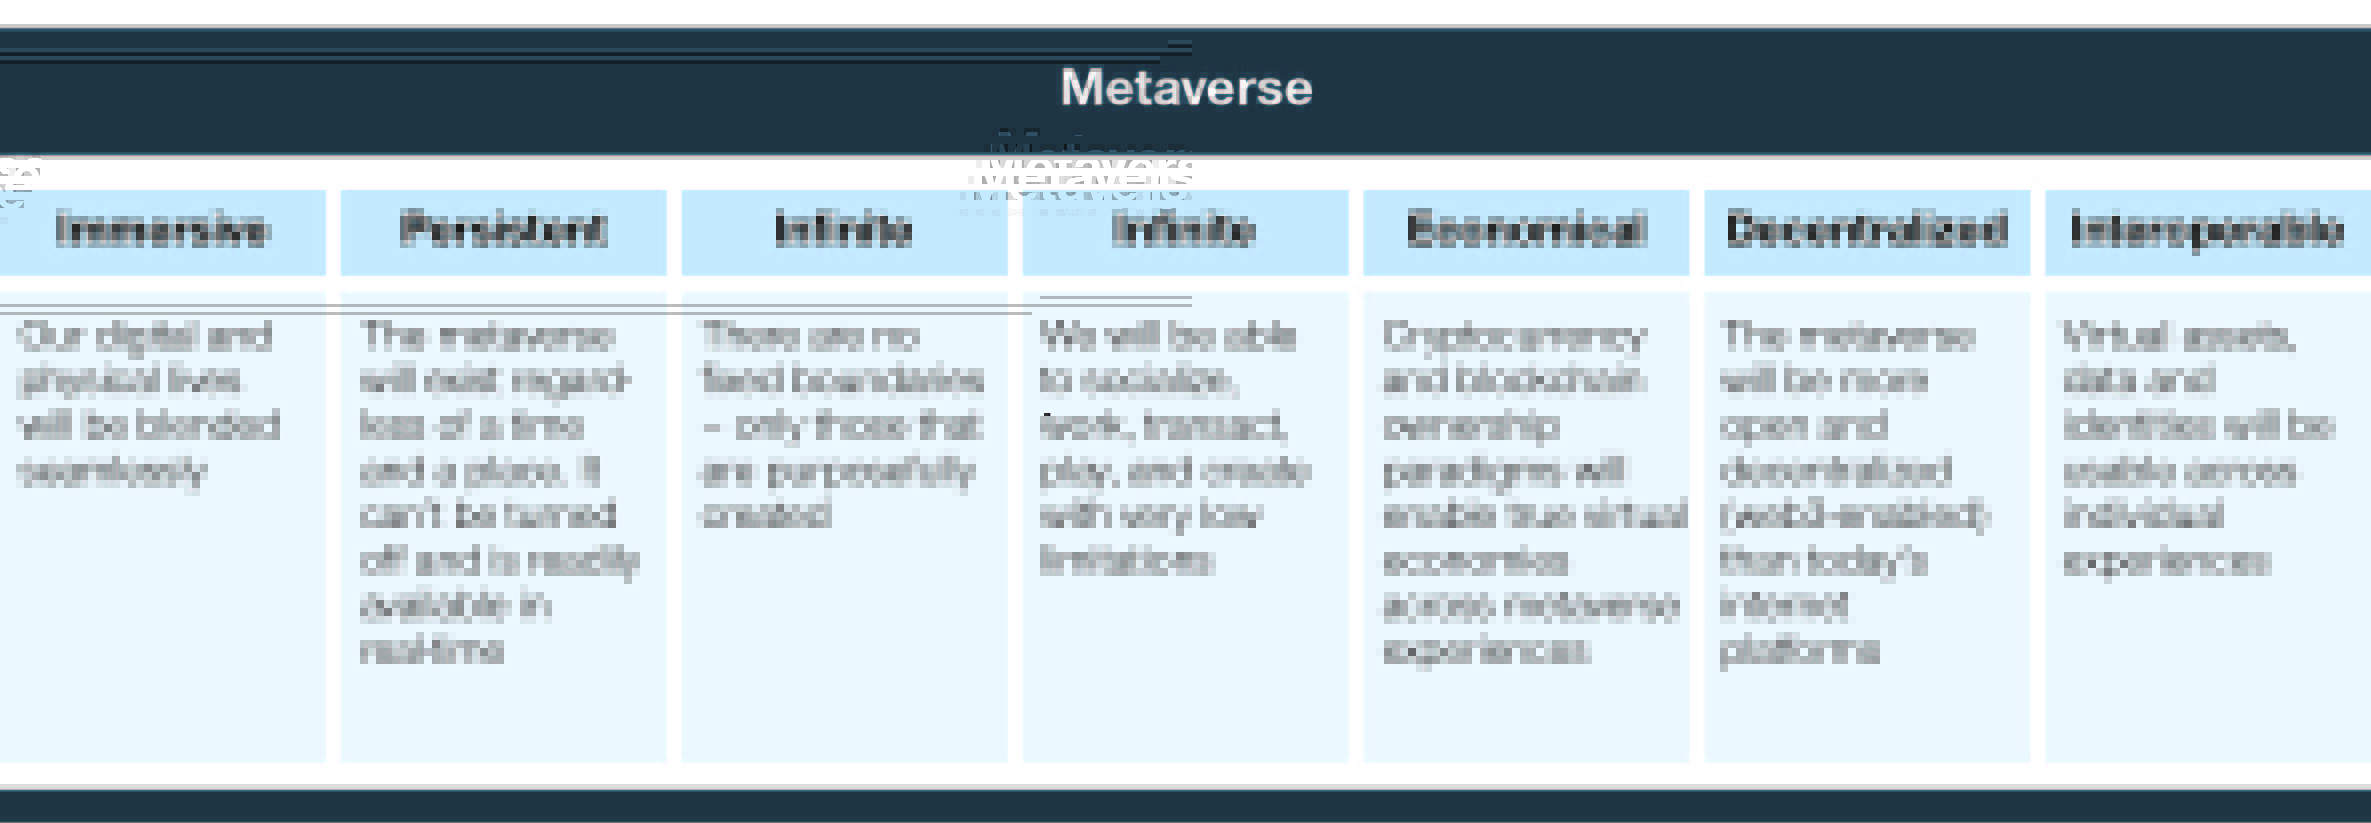 metaverse characteristics